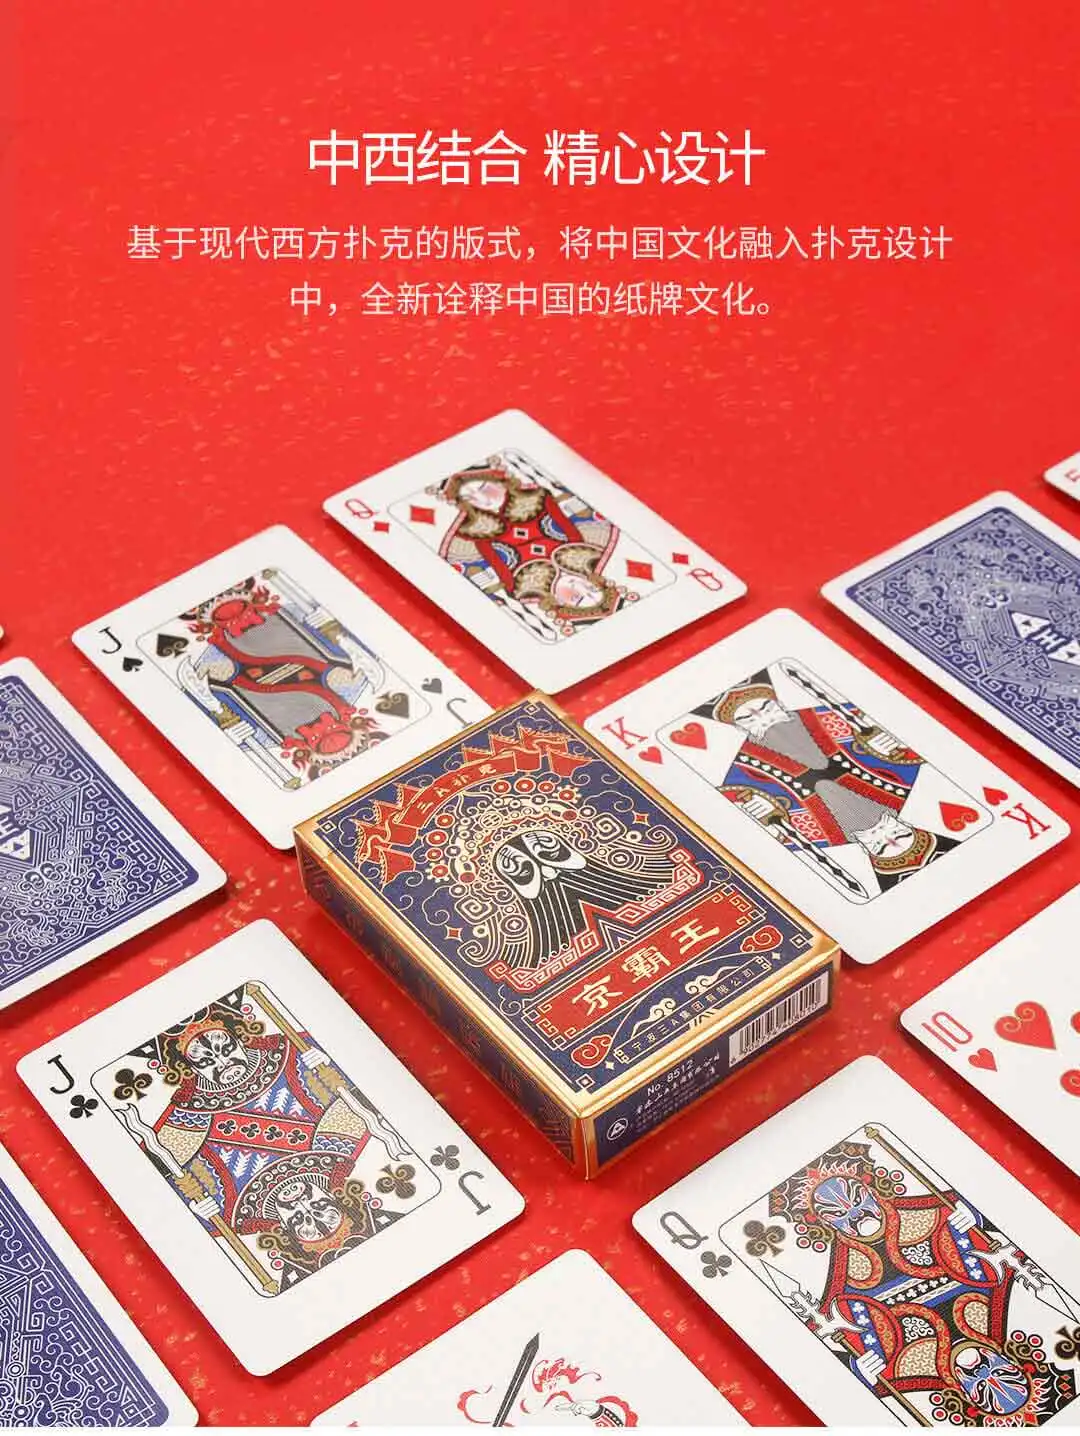 Xiaomi Mijia Youpin Пекинская опера Facebook Poker China National Heritage Inspiration and Leisure Games портативный